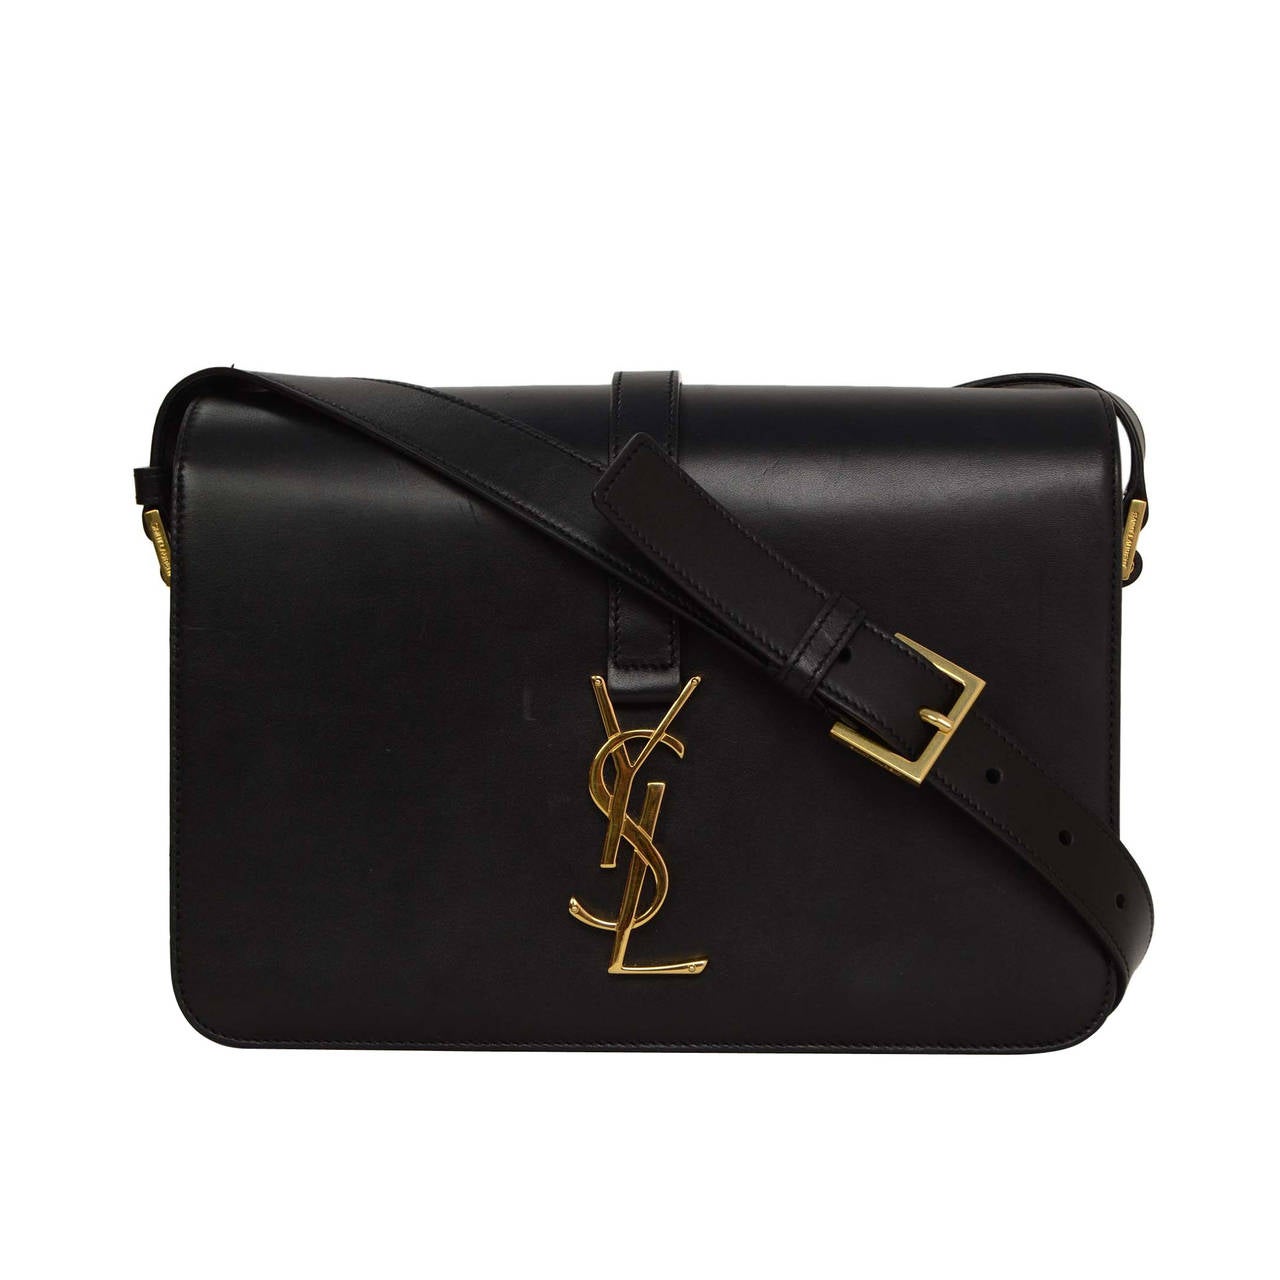 YVES SAINT LAURENT YSL Black Leather Sac Universite Crossbody Bag ...  